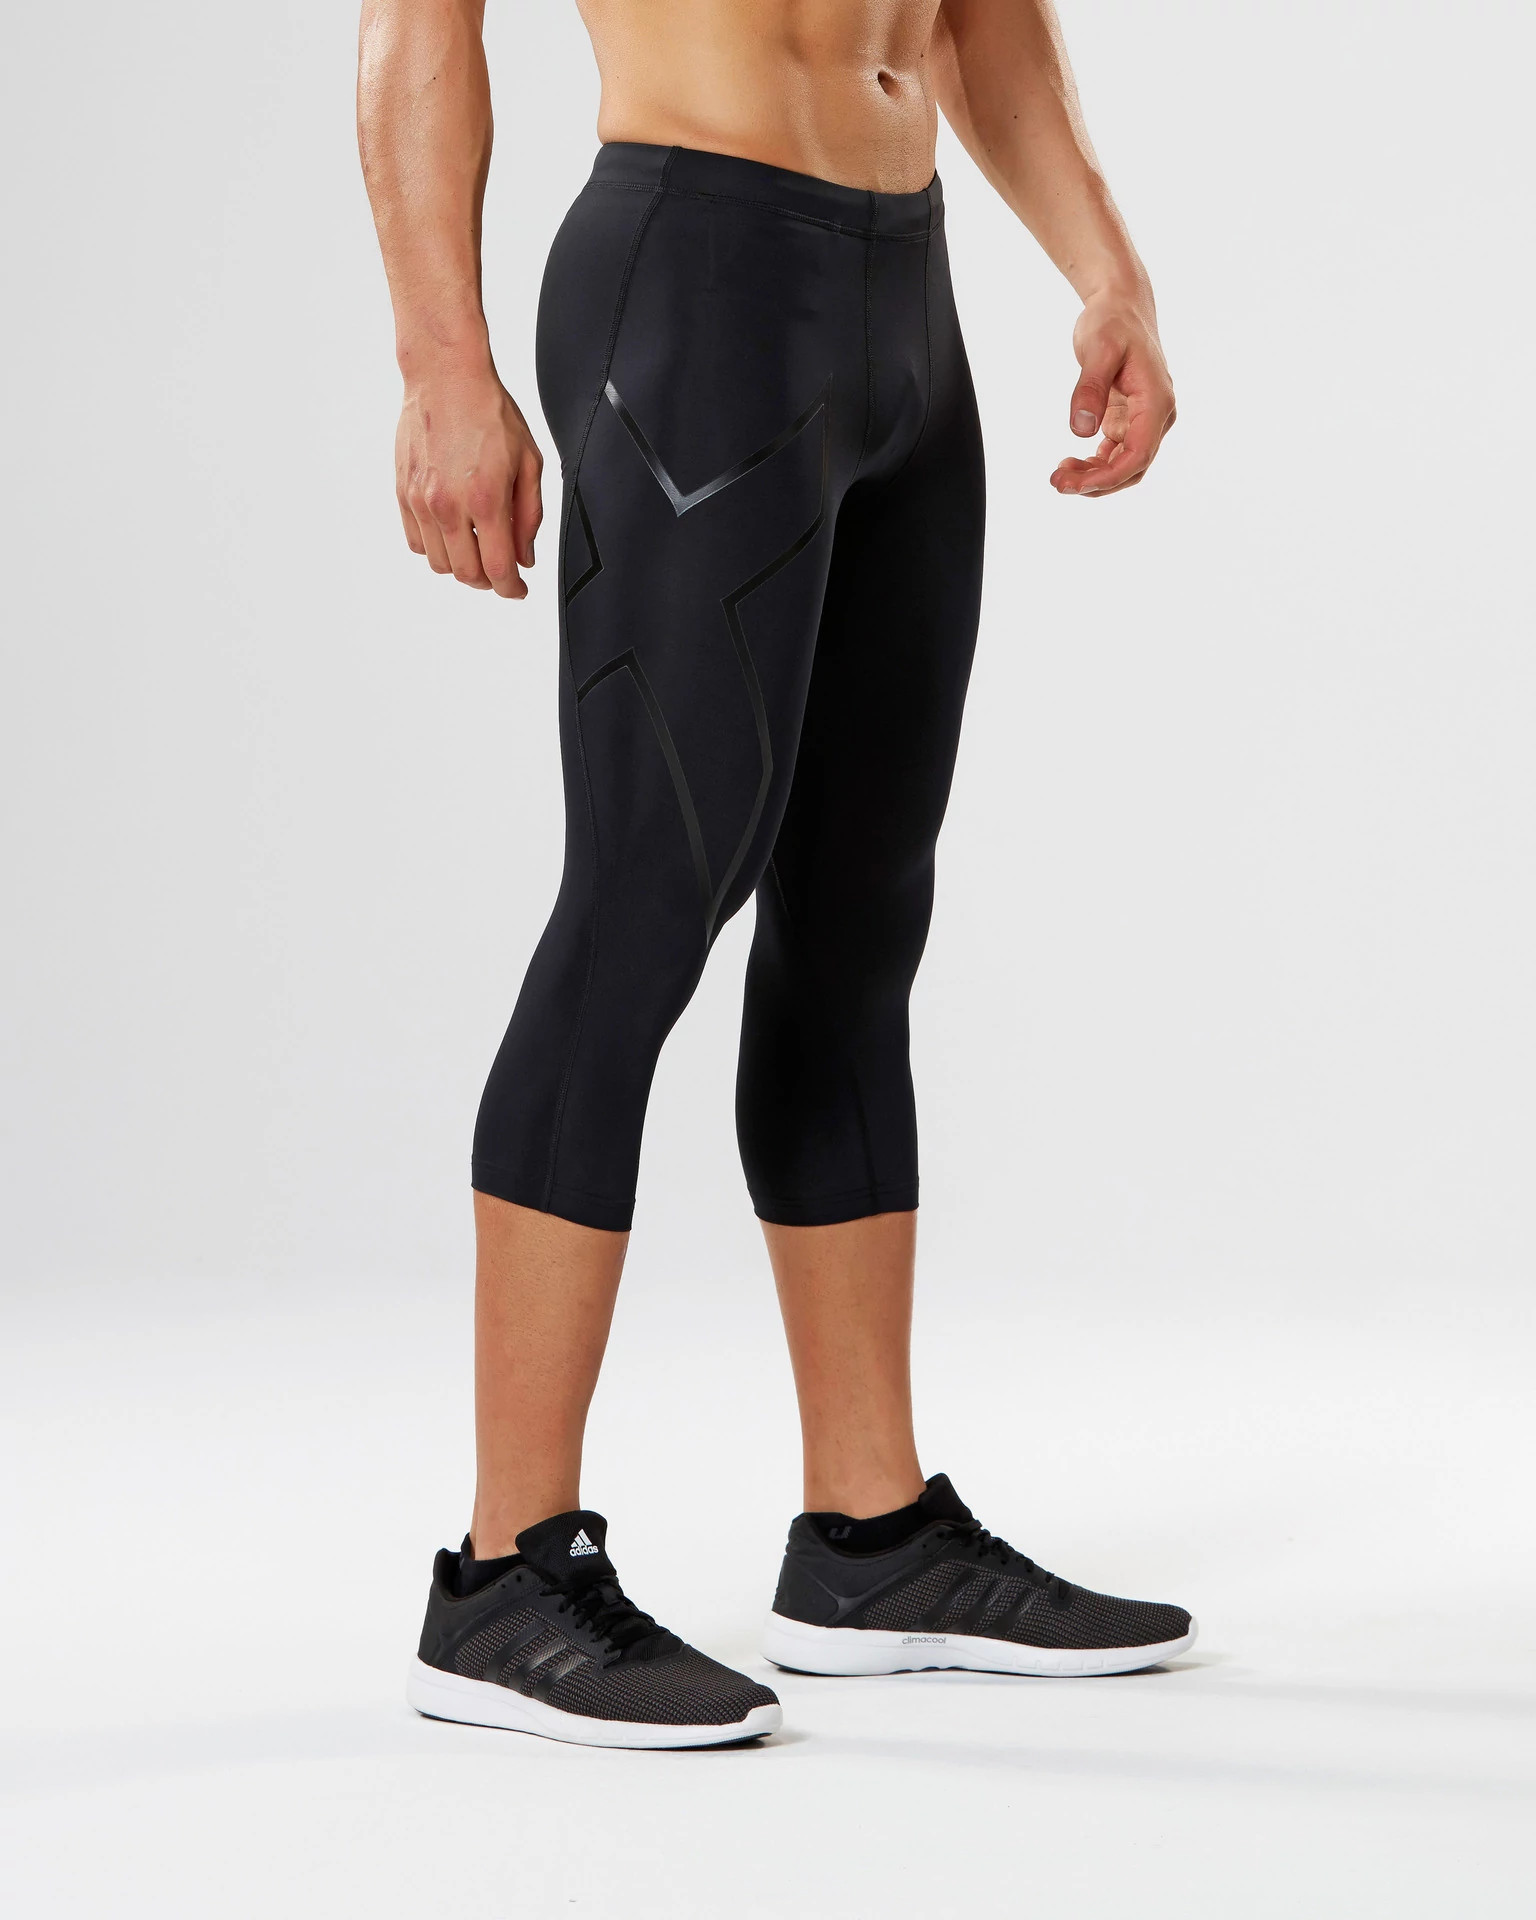 2XU Core Compression leggings for women - Soccer Sport Fitness